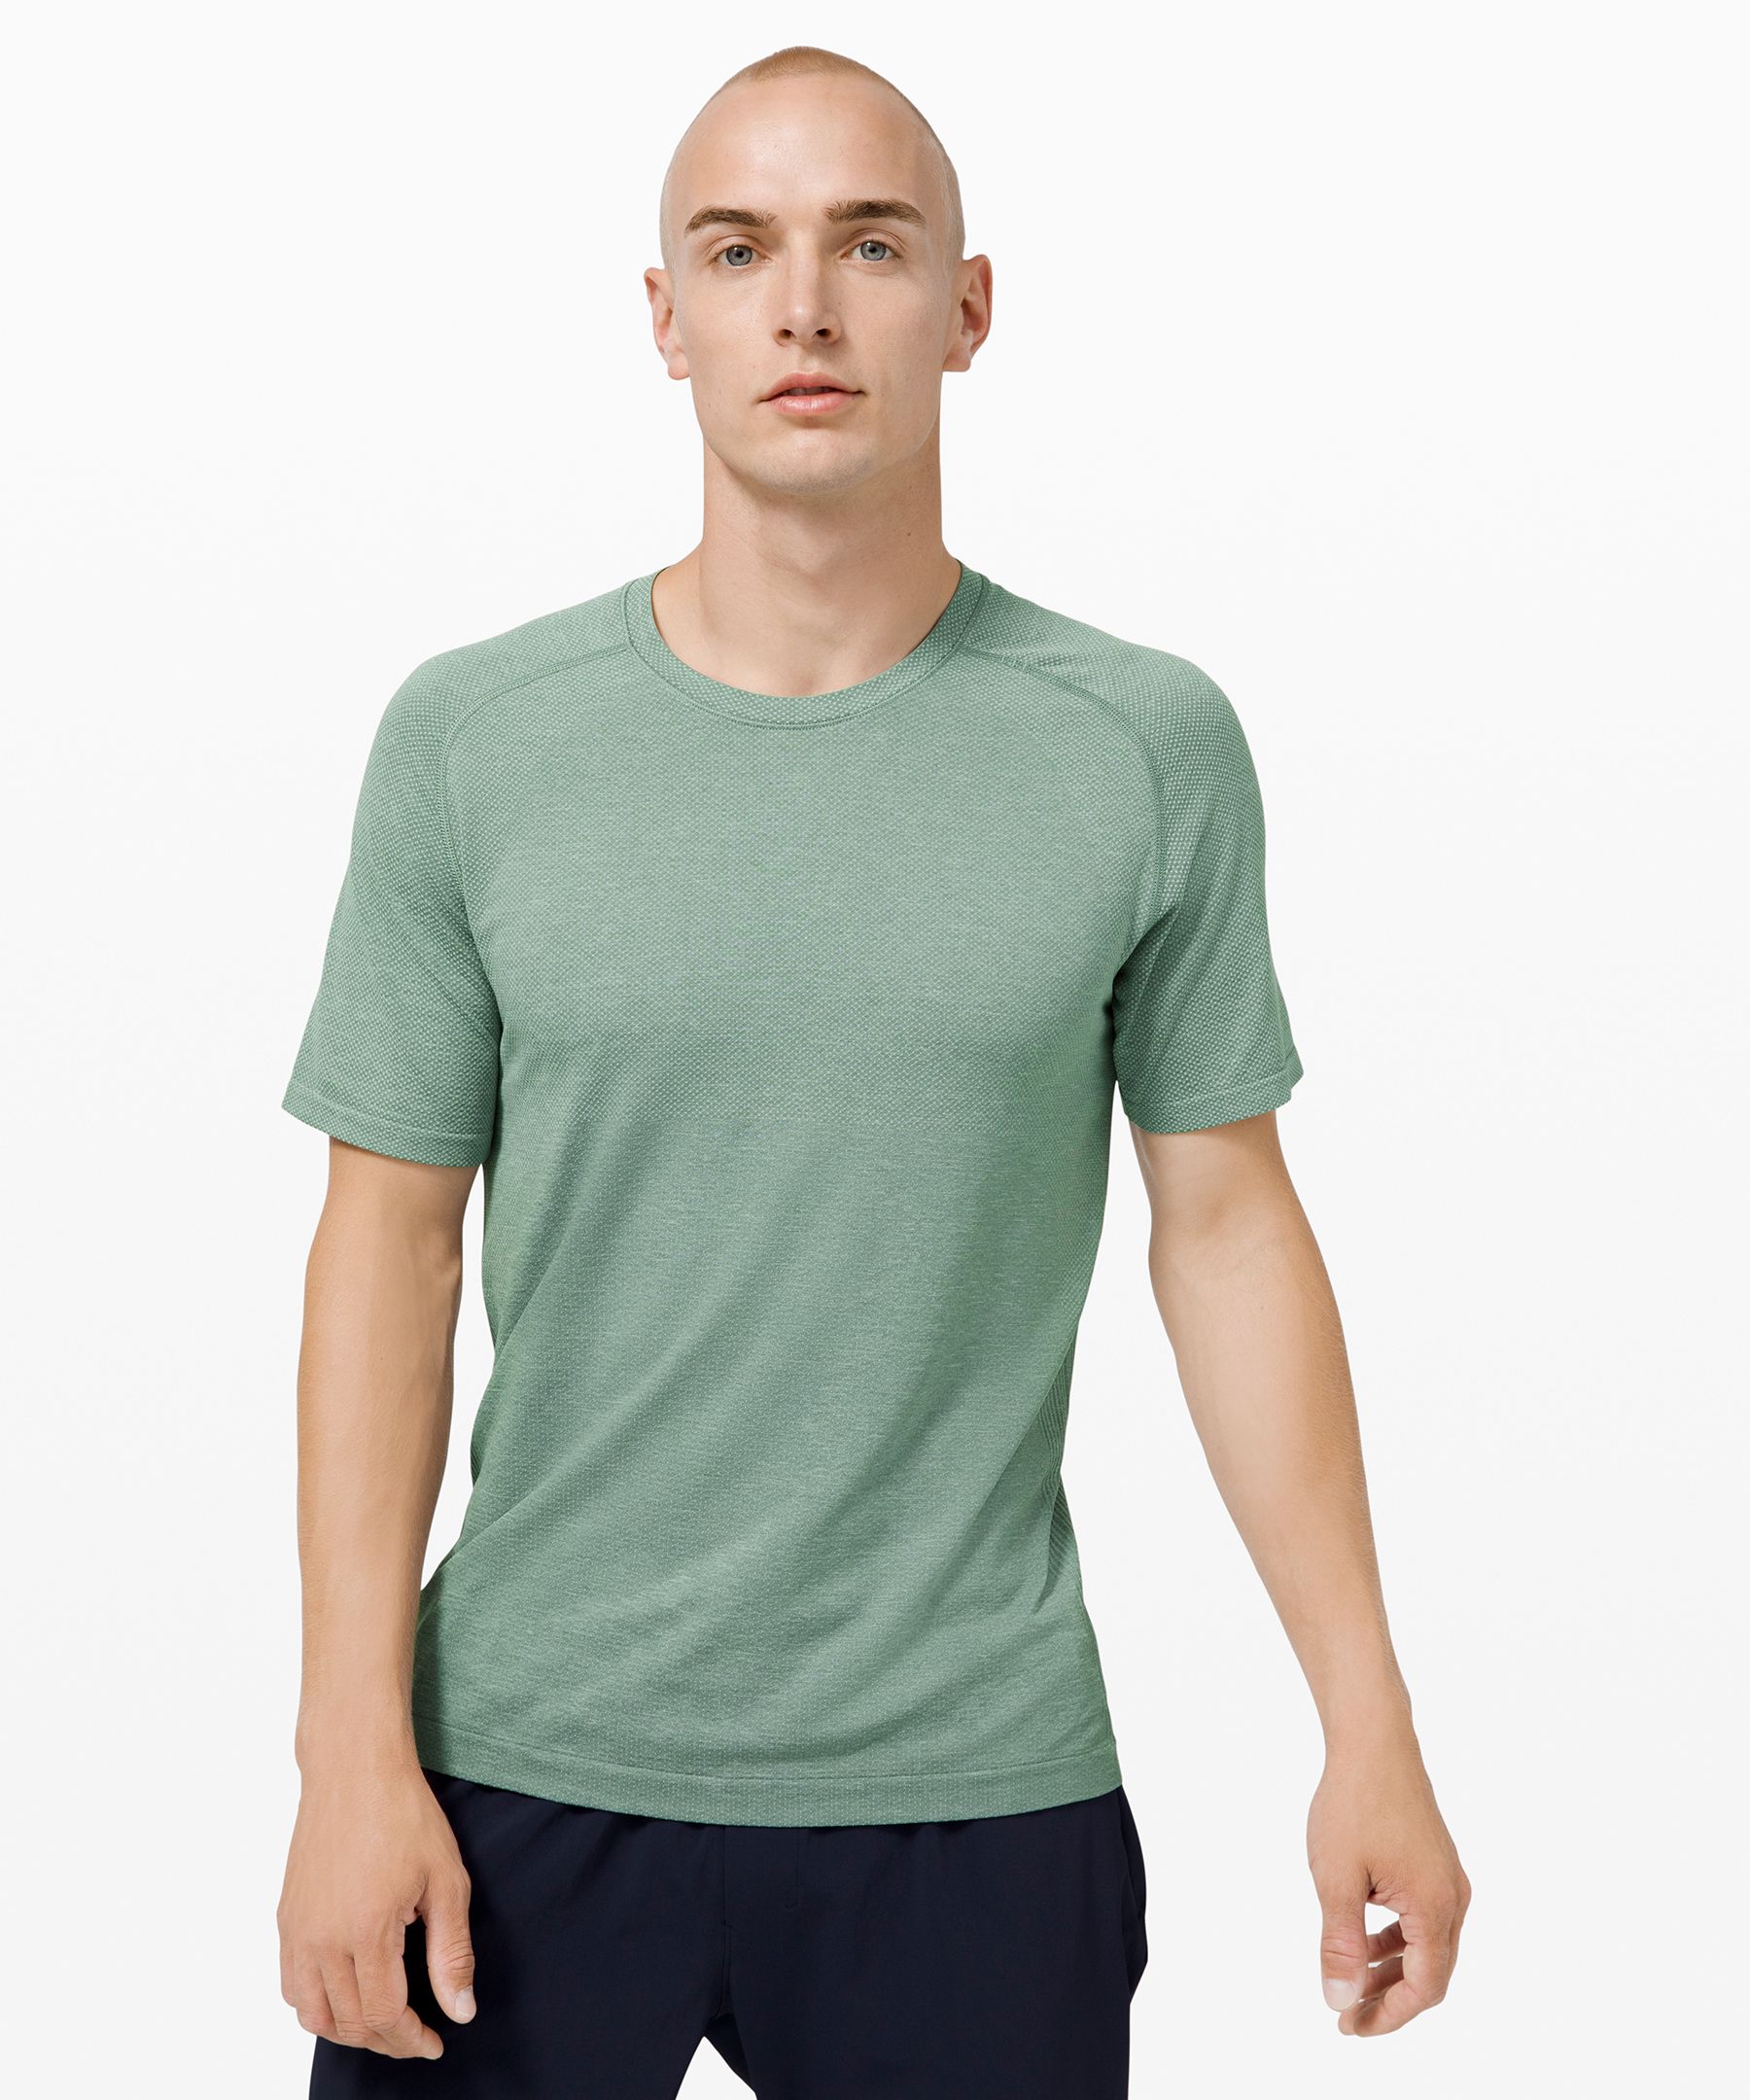 lululemon green shirt